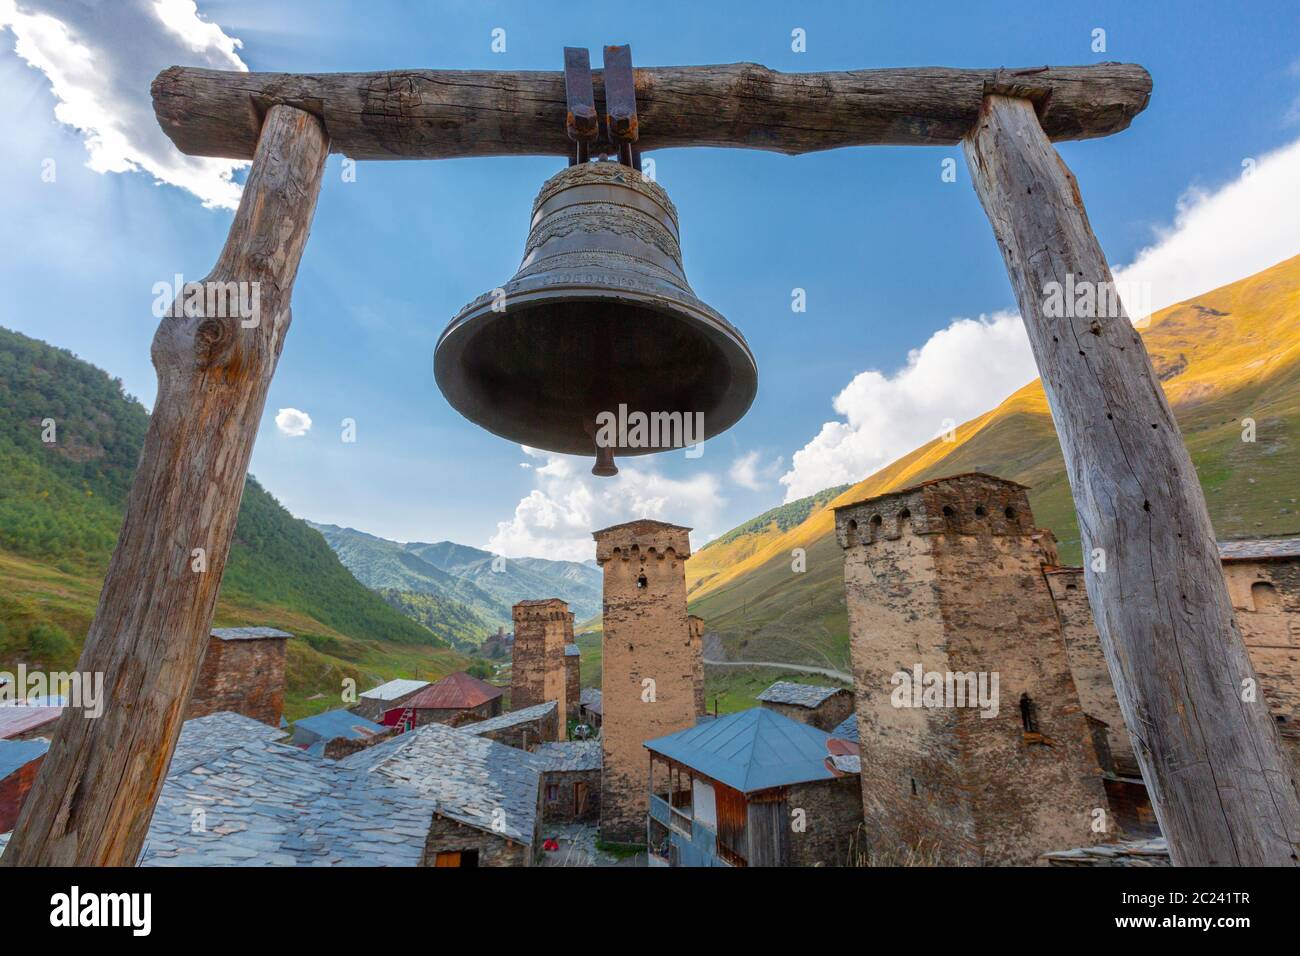 Church bell in the village of Ushguli, Caucasus Mountains, Georgia Stock Photo